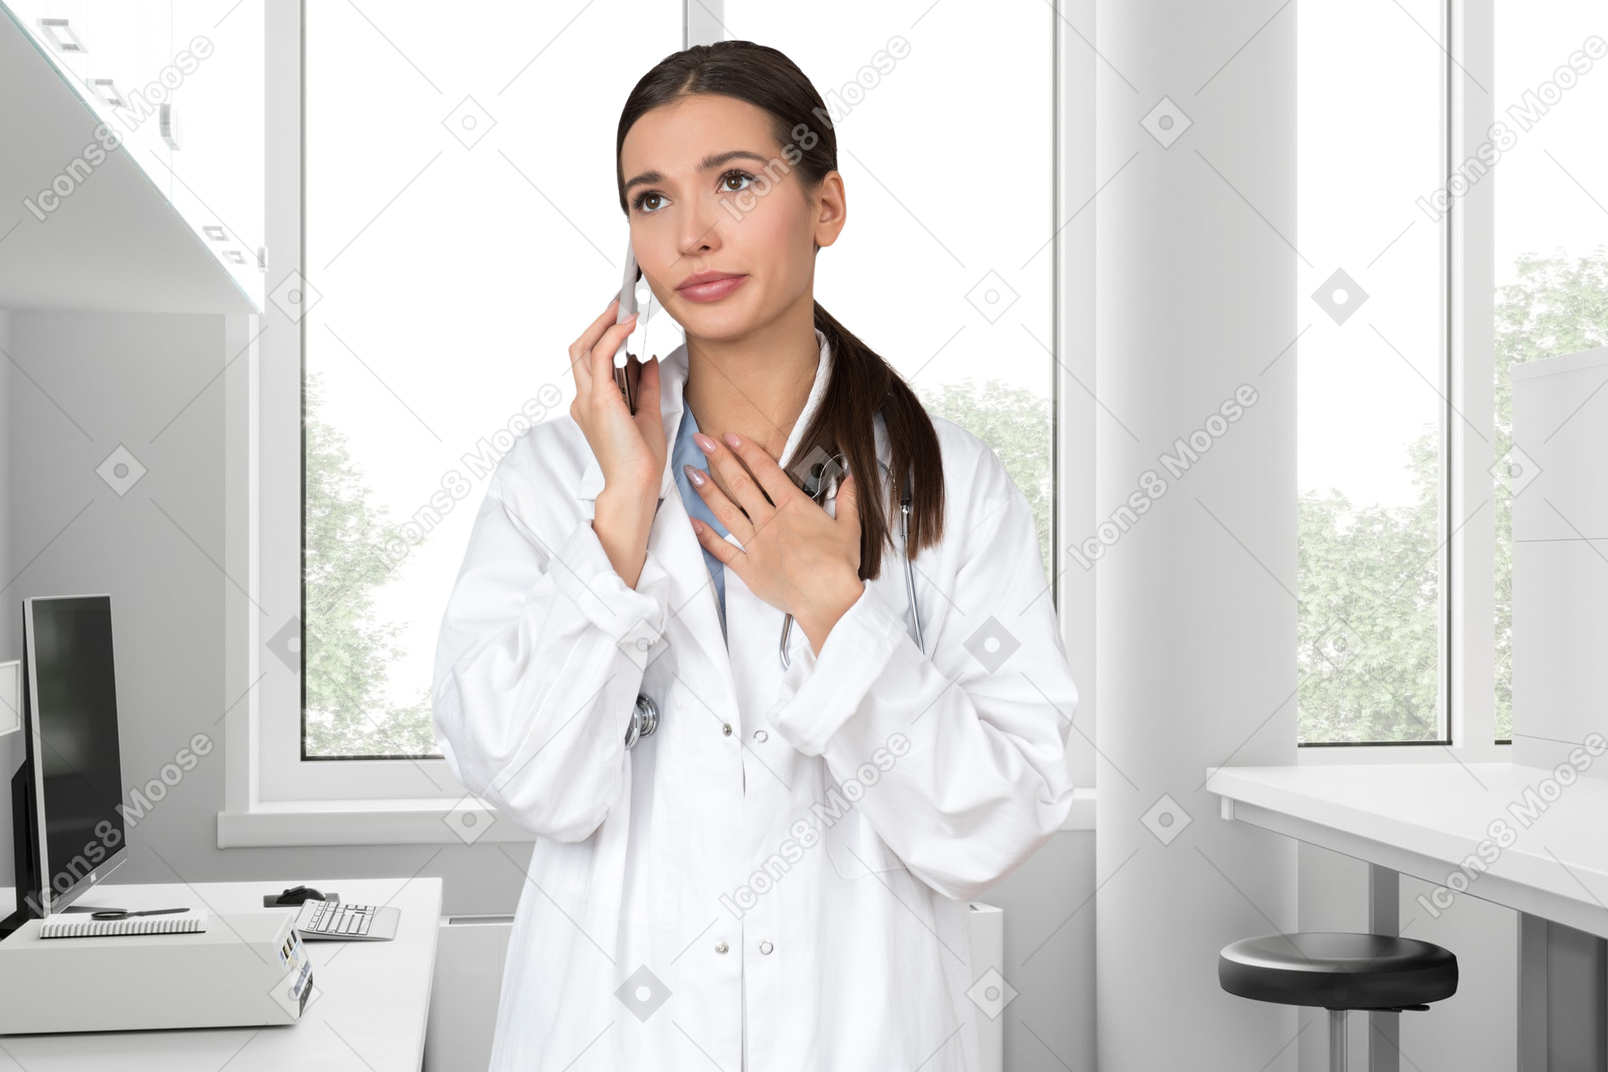 Sad woman doctor talking on the phone